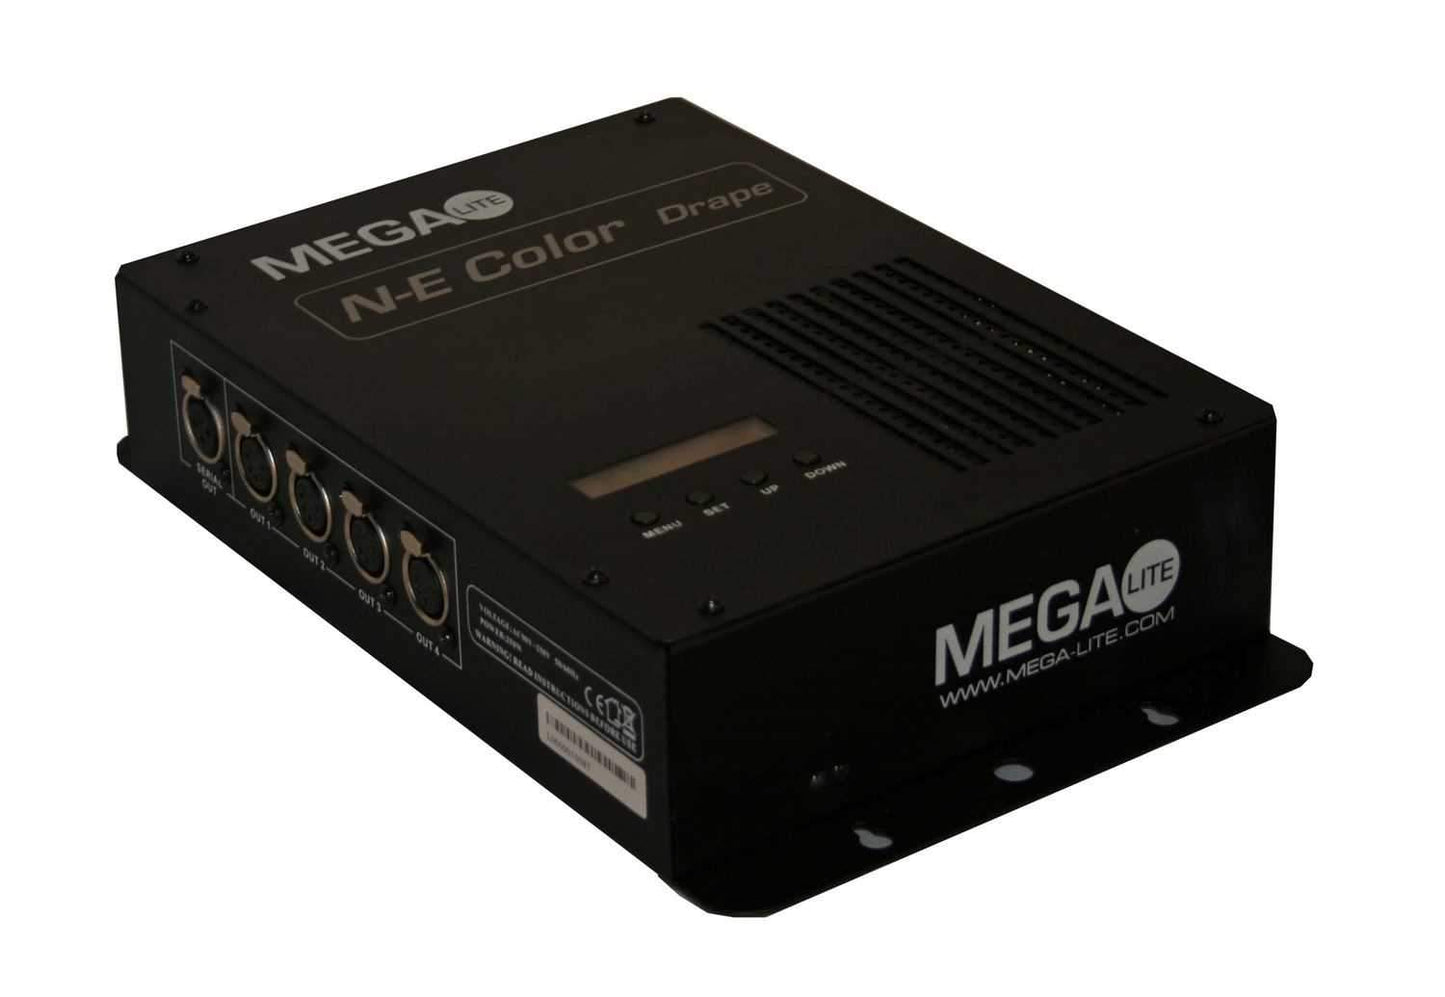 Mega Lite N-E Color Drape Drive System - ProSound and Stage Lighting